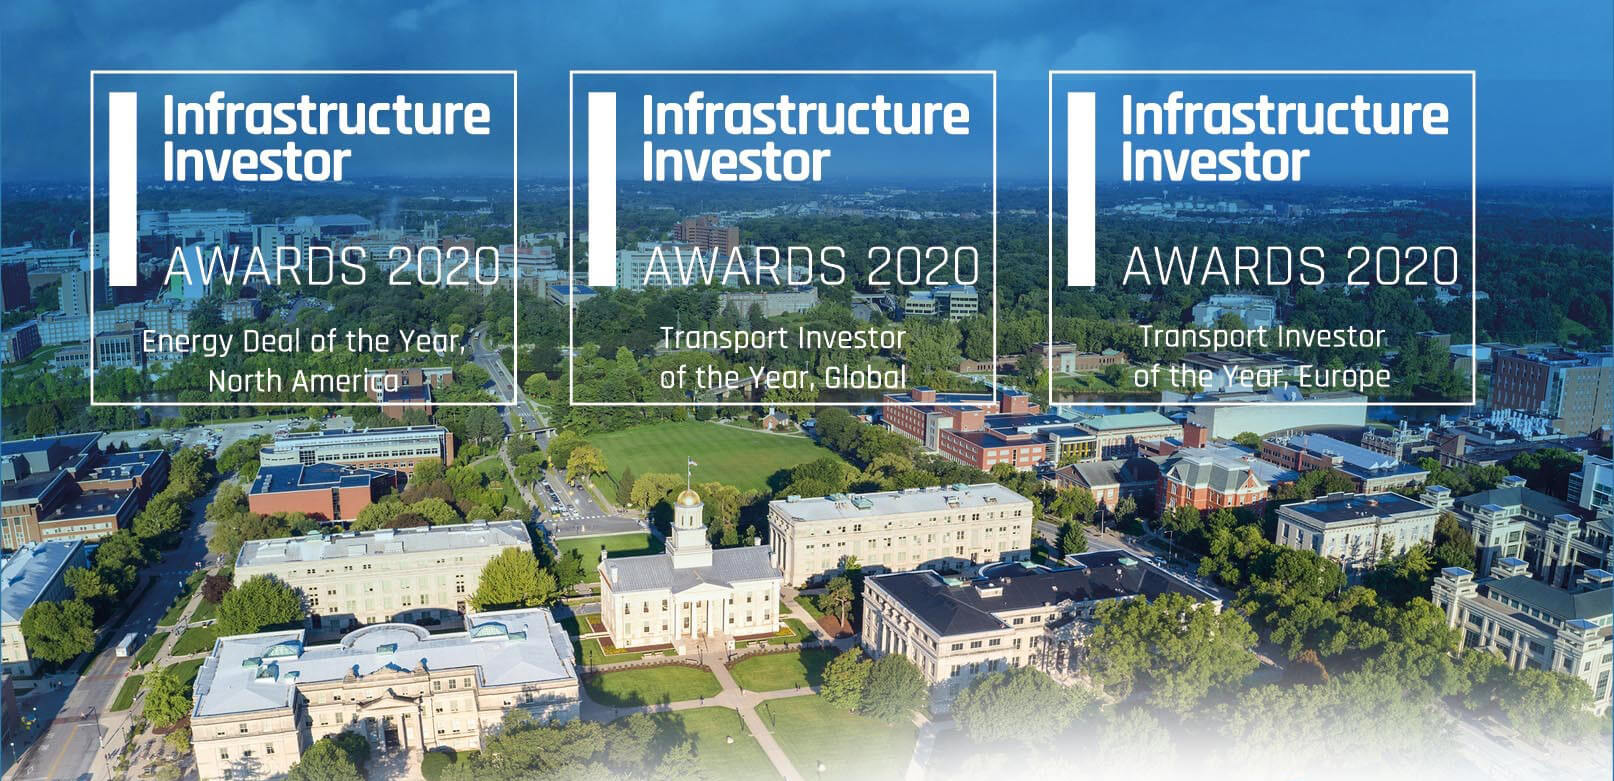 University of IOWA with awards text overlaid